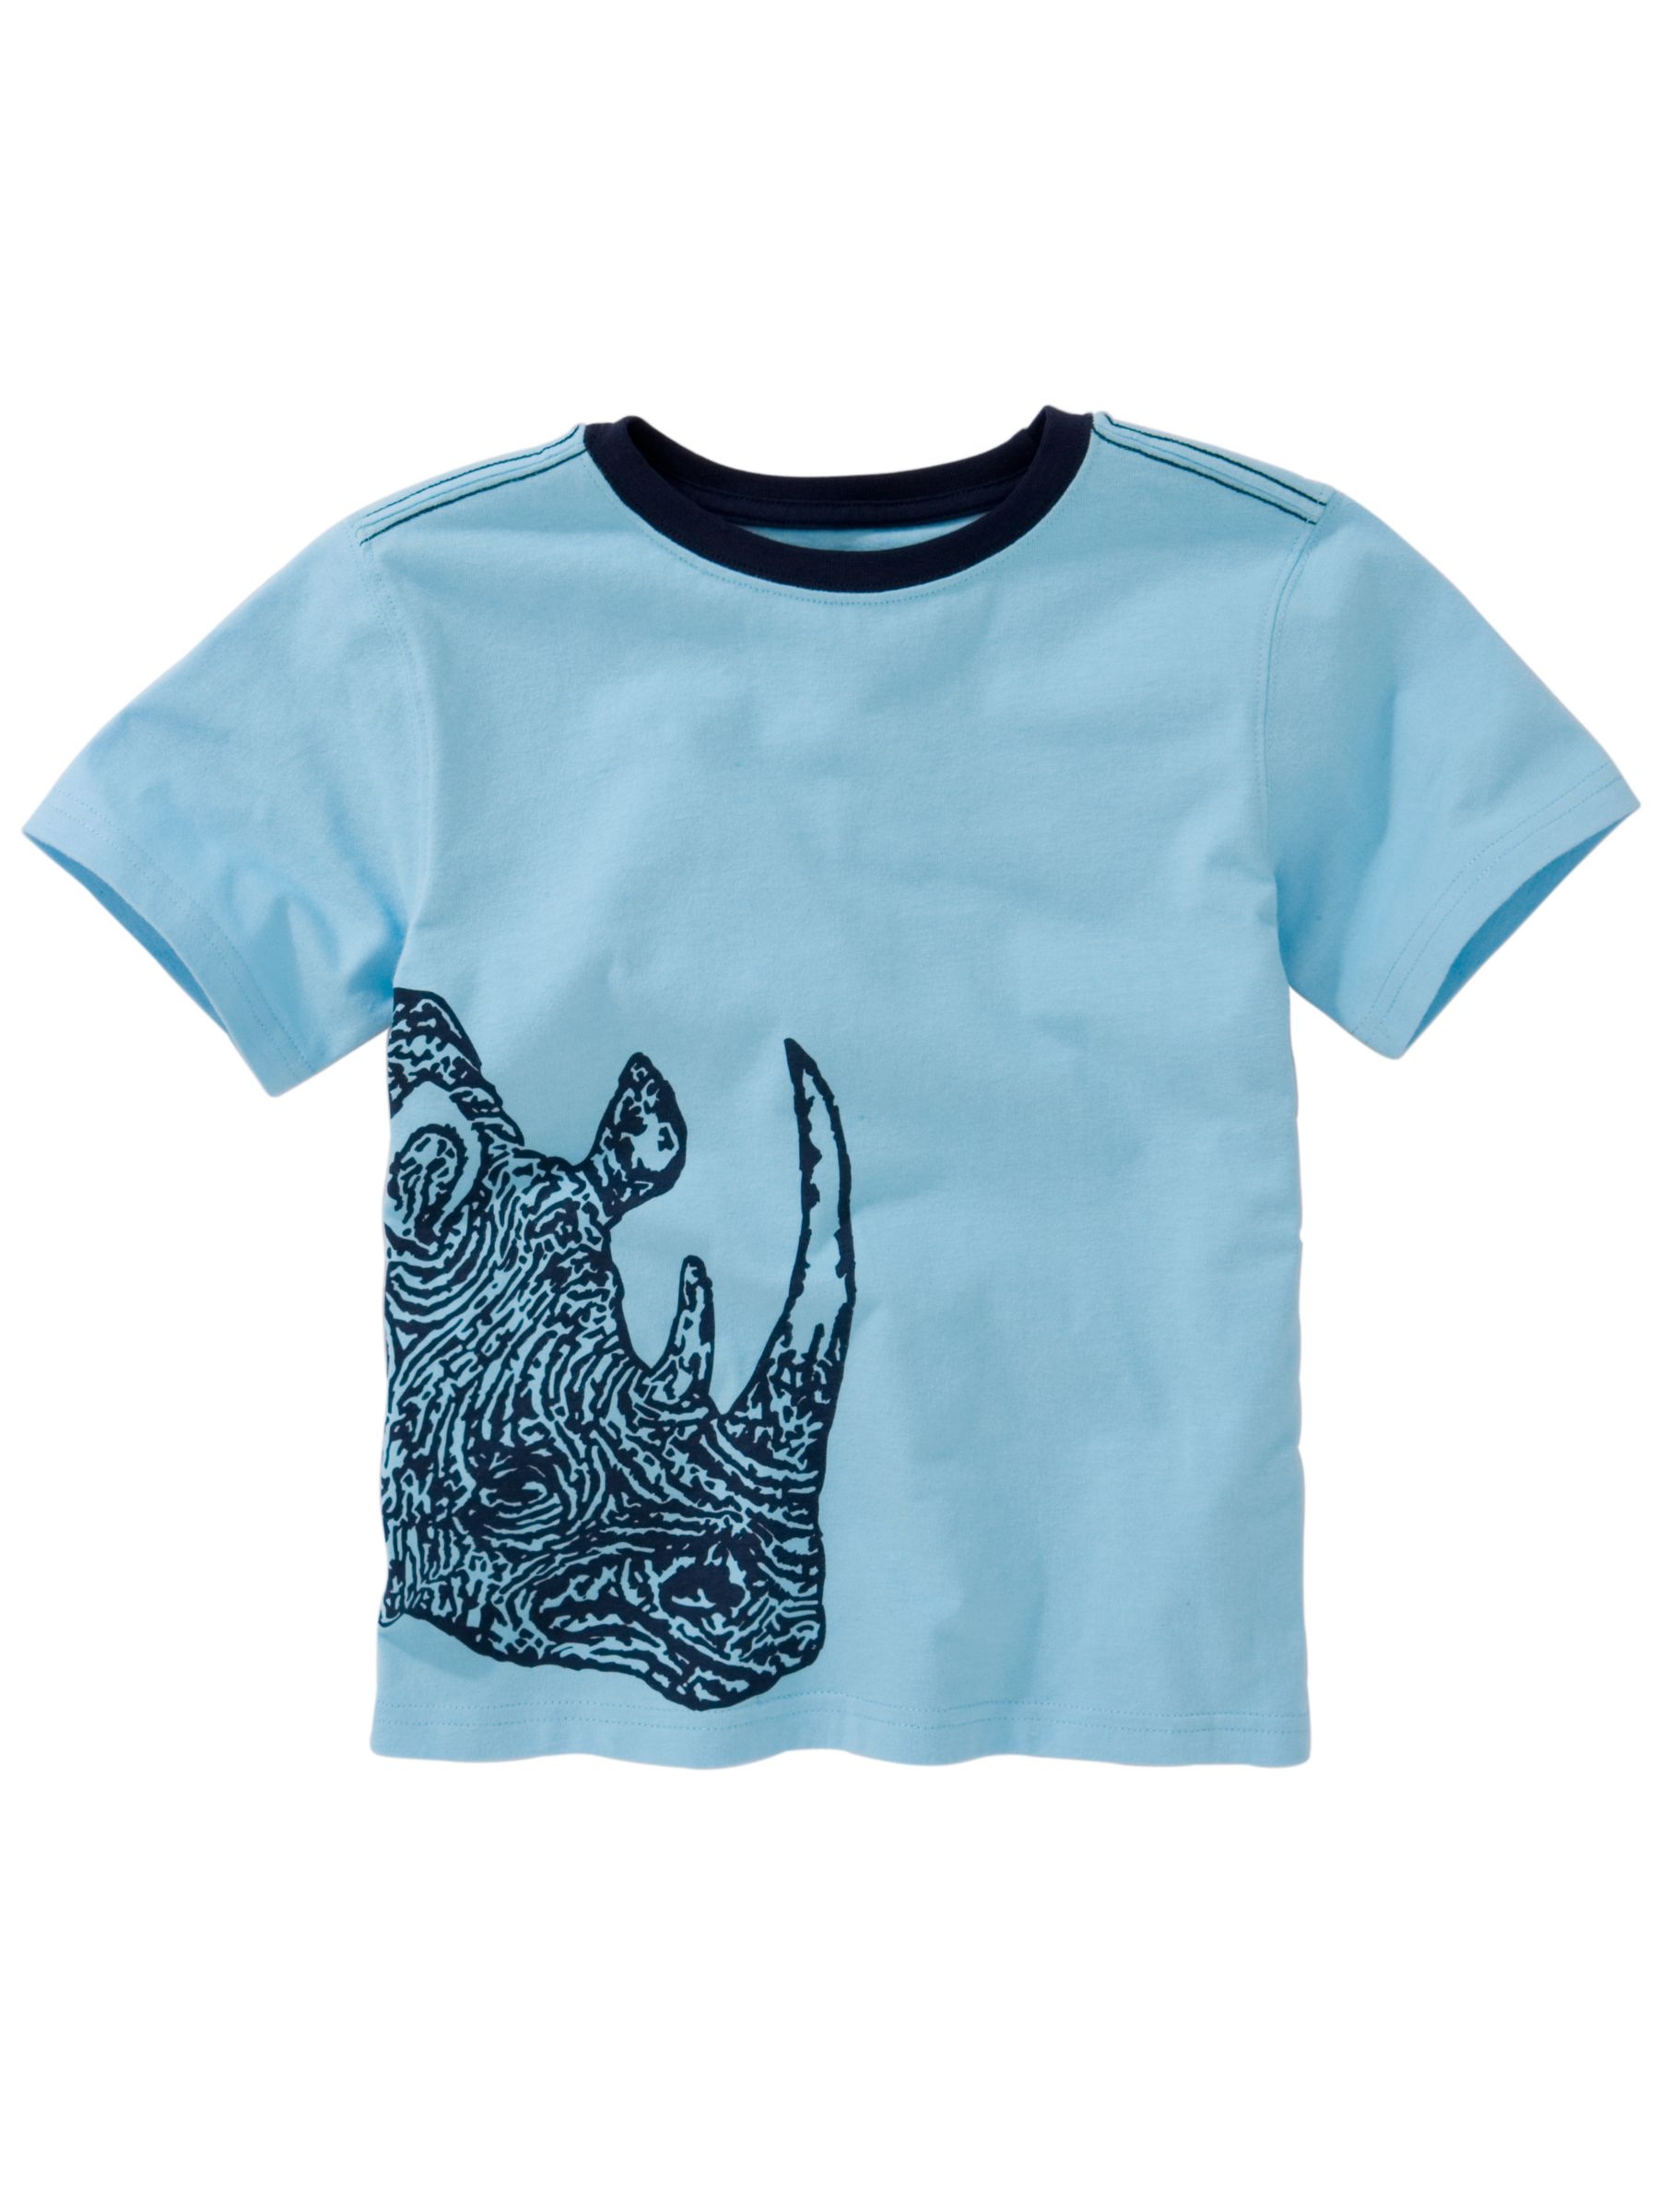 John Lewis Boy s Rhino Graphic T-Shirt, Blue